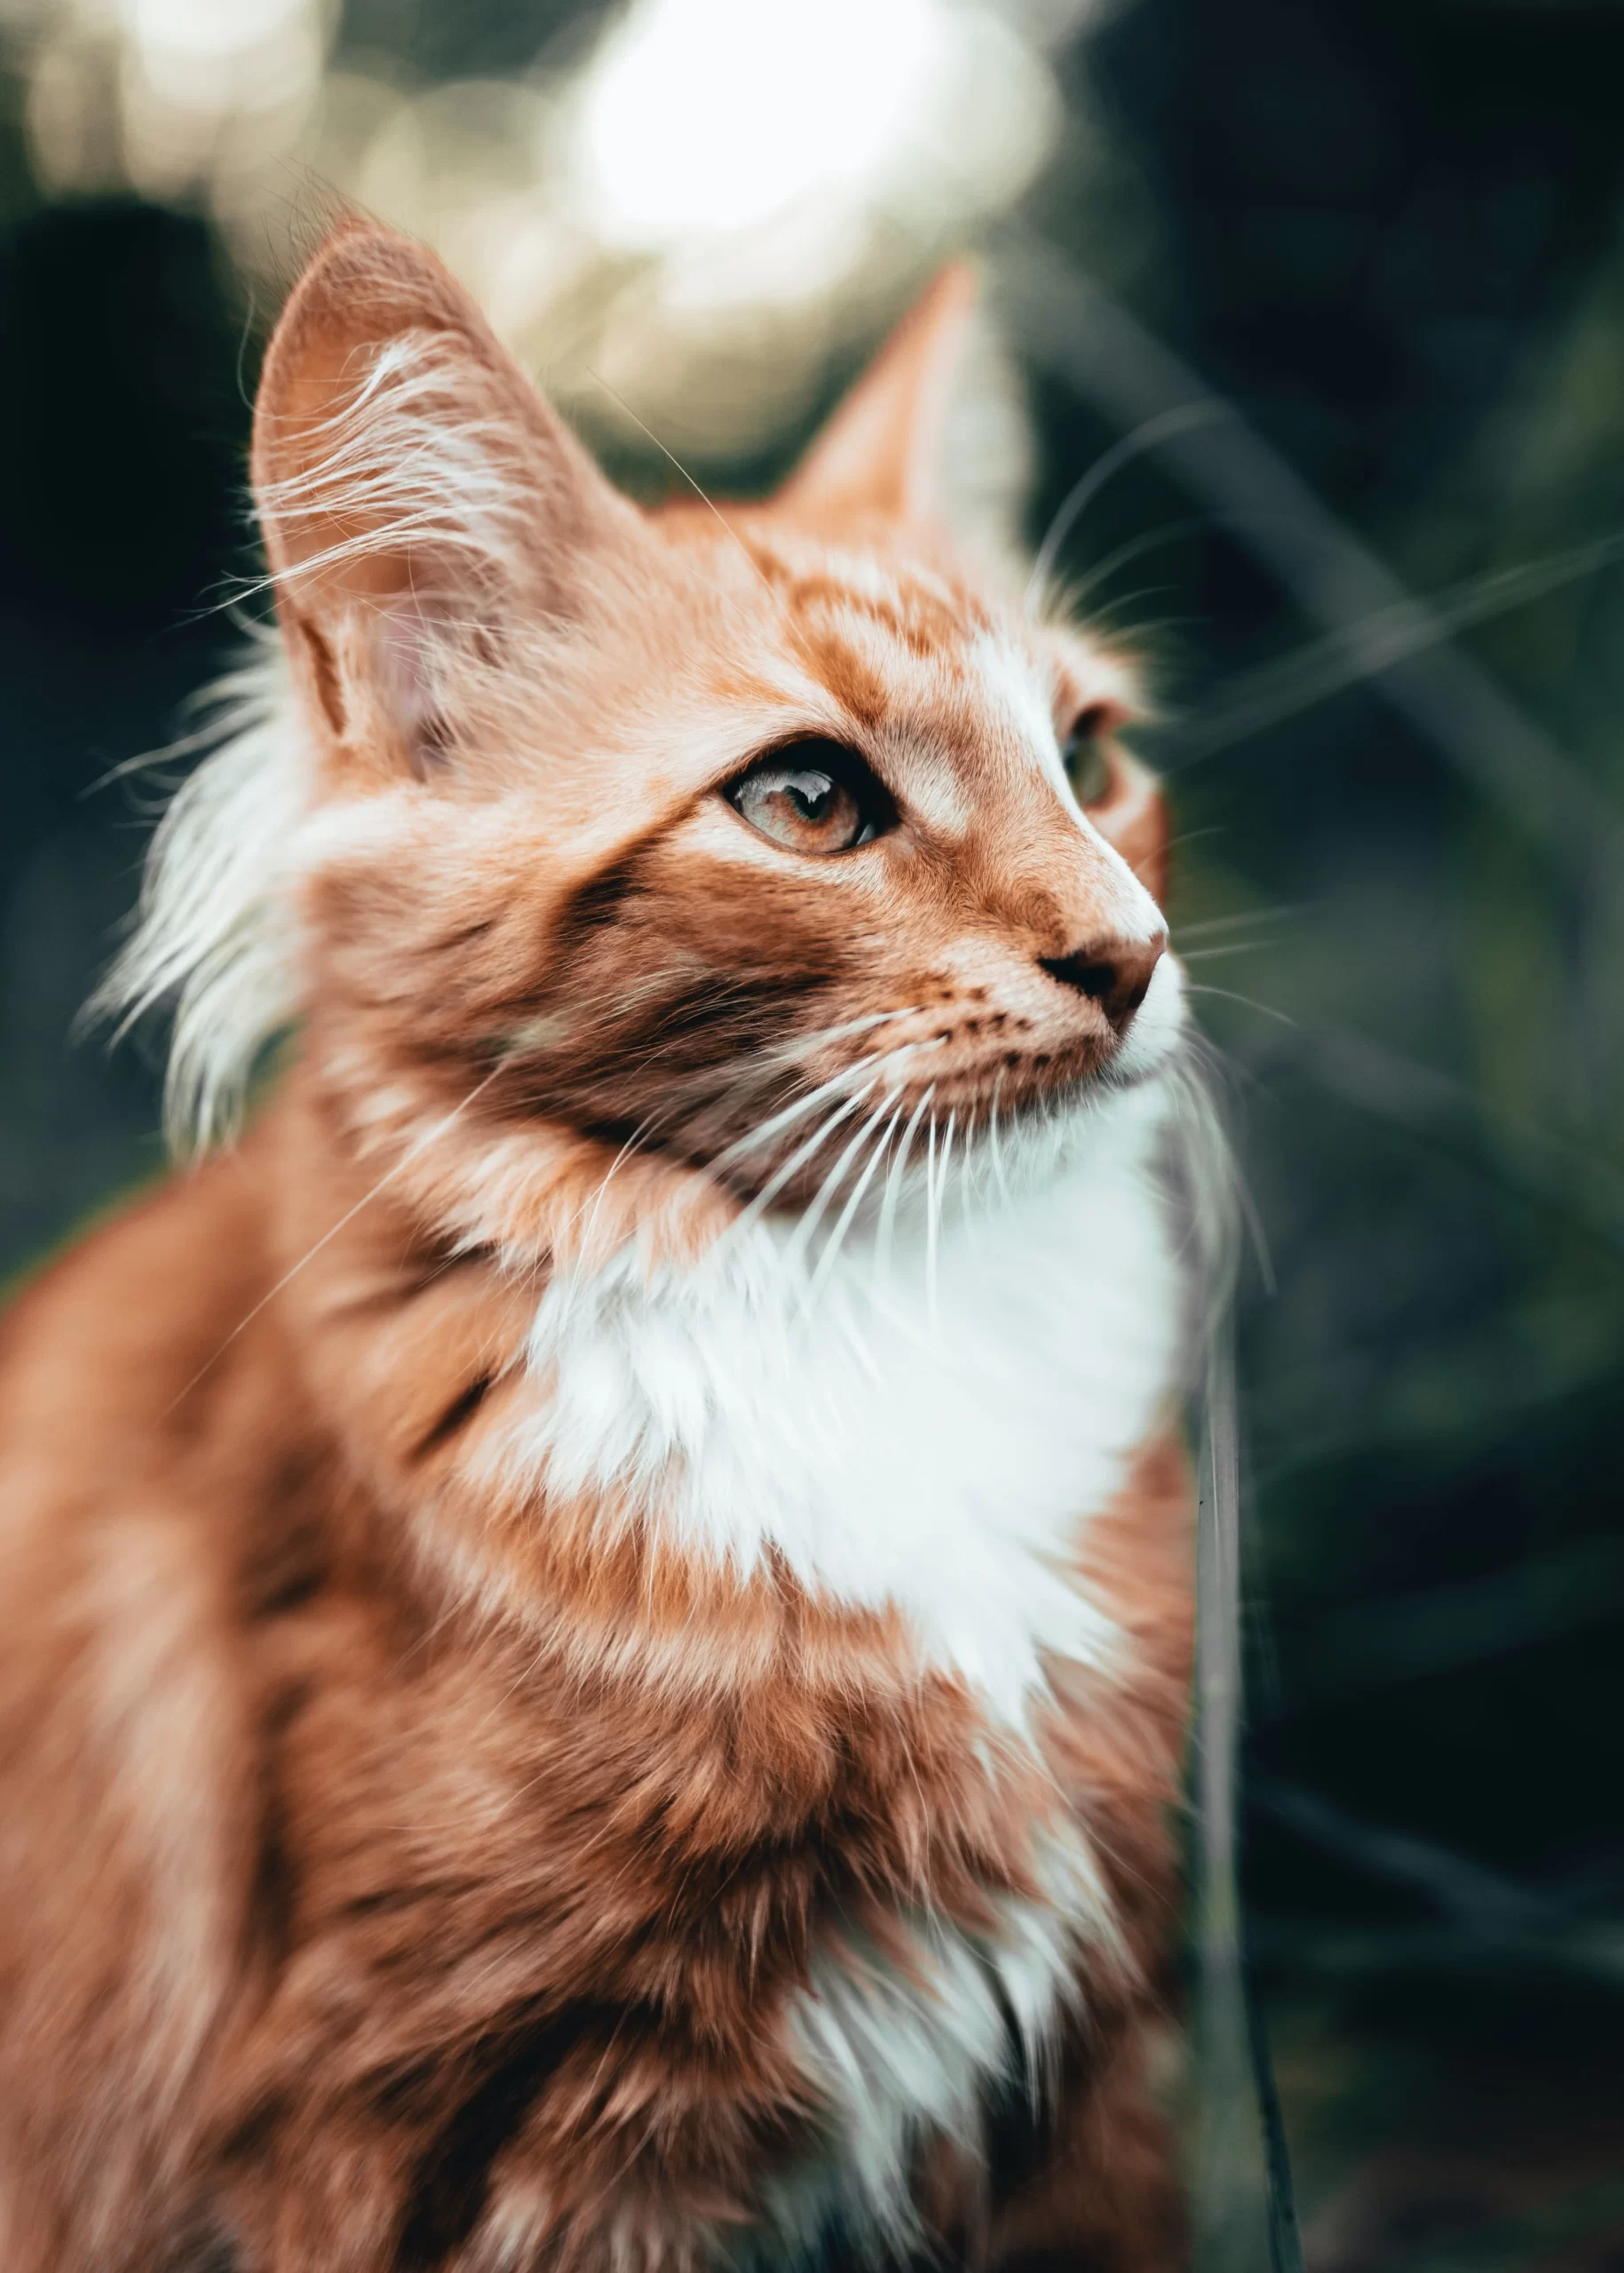 emil-widlund-Orange Cat with white chest ruffled fur in against the wind-unsplash